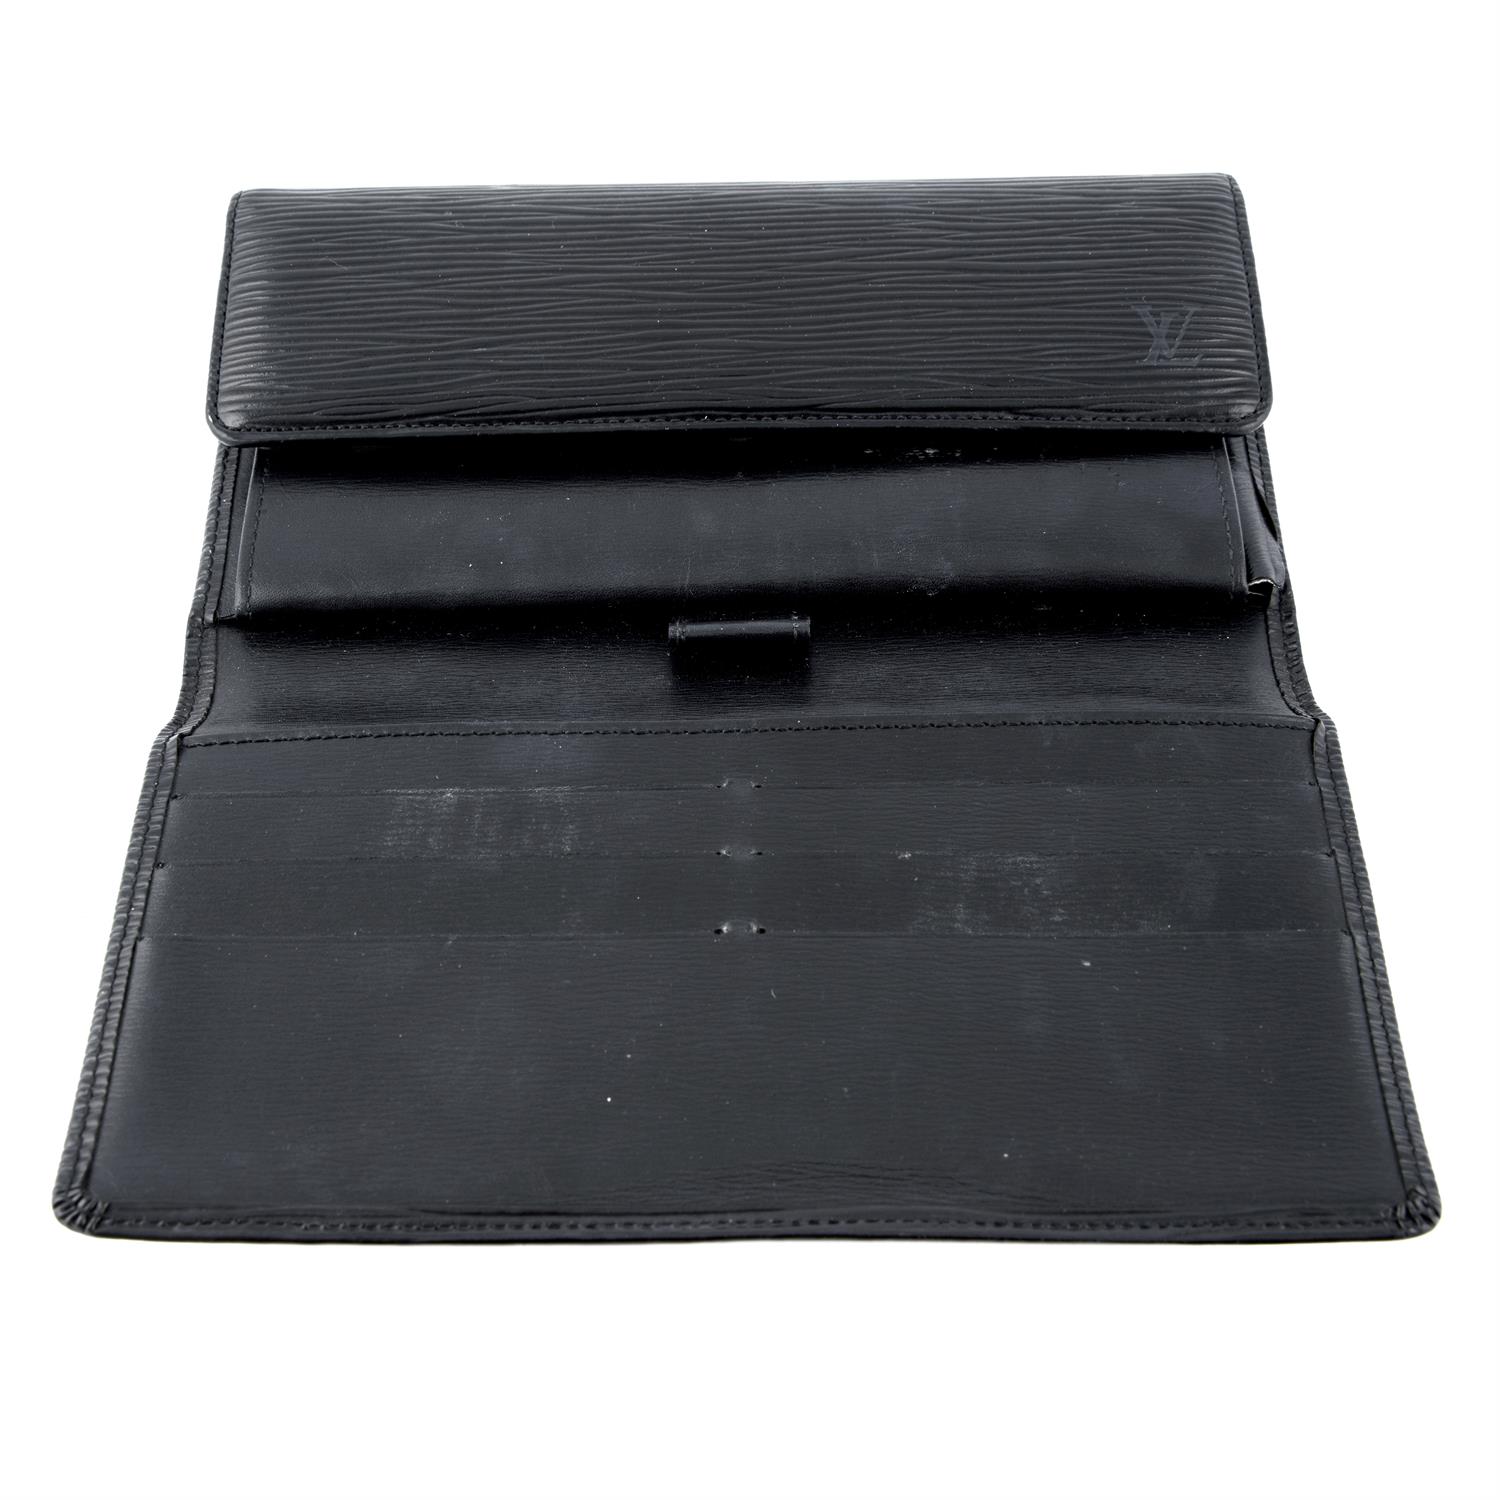 LOUIS VUITTON - a black epi leather trifold wallet. - Image 3 of 3